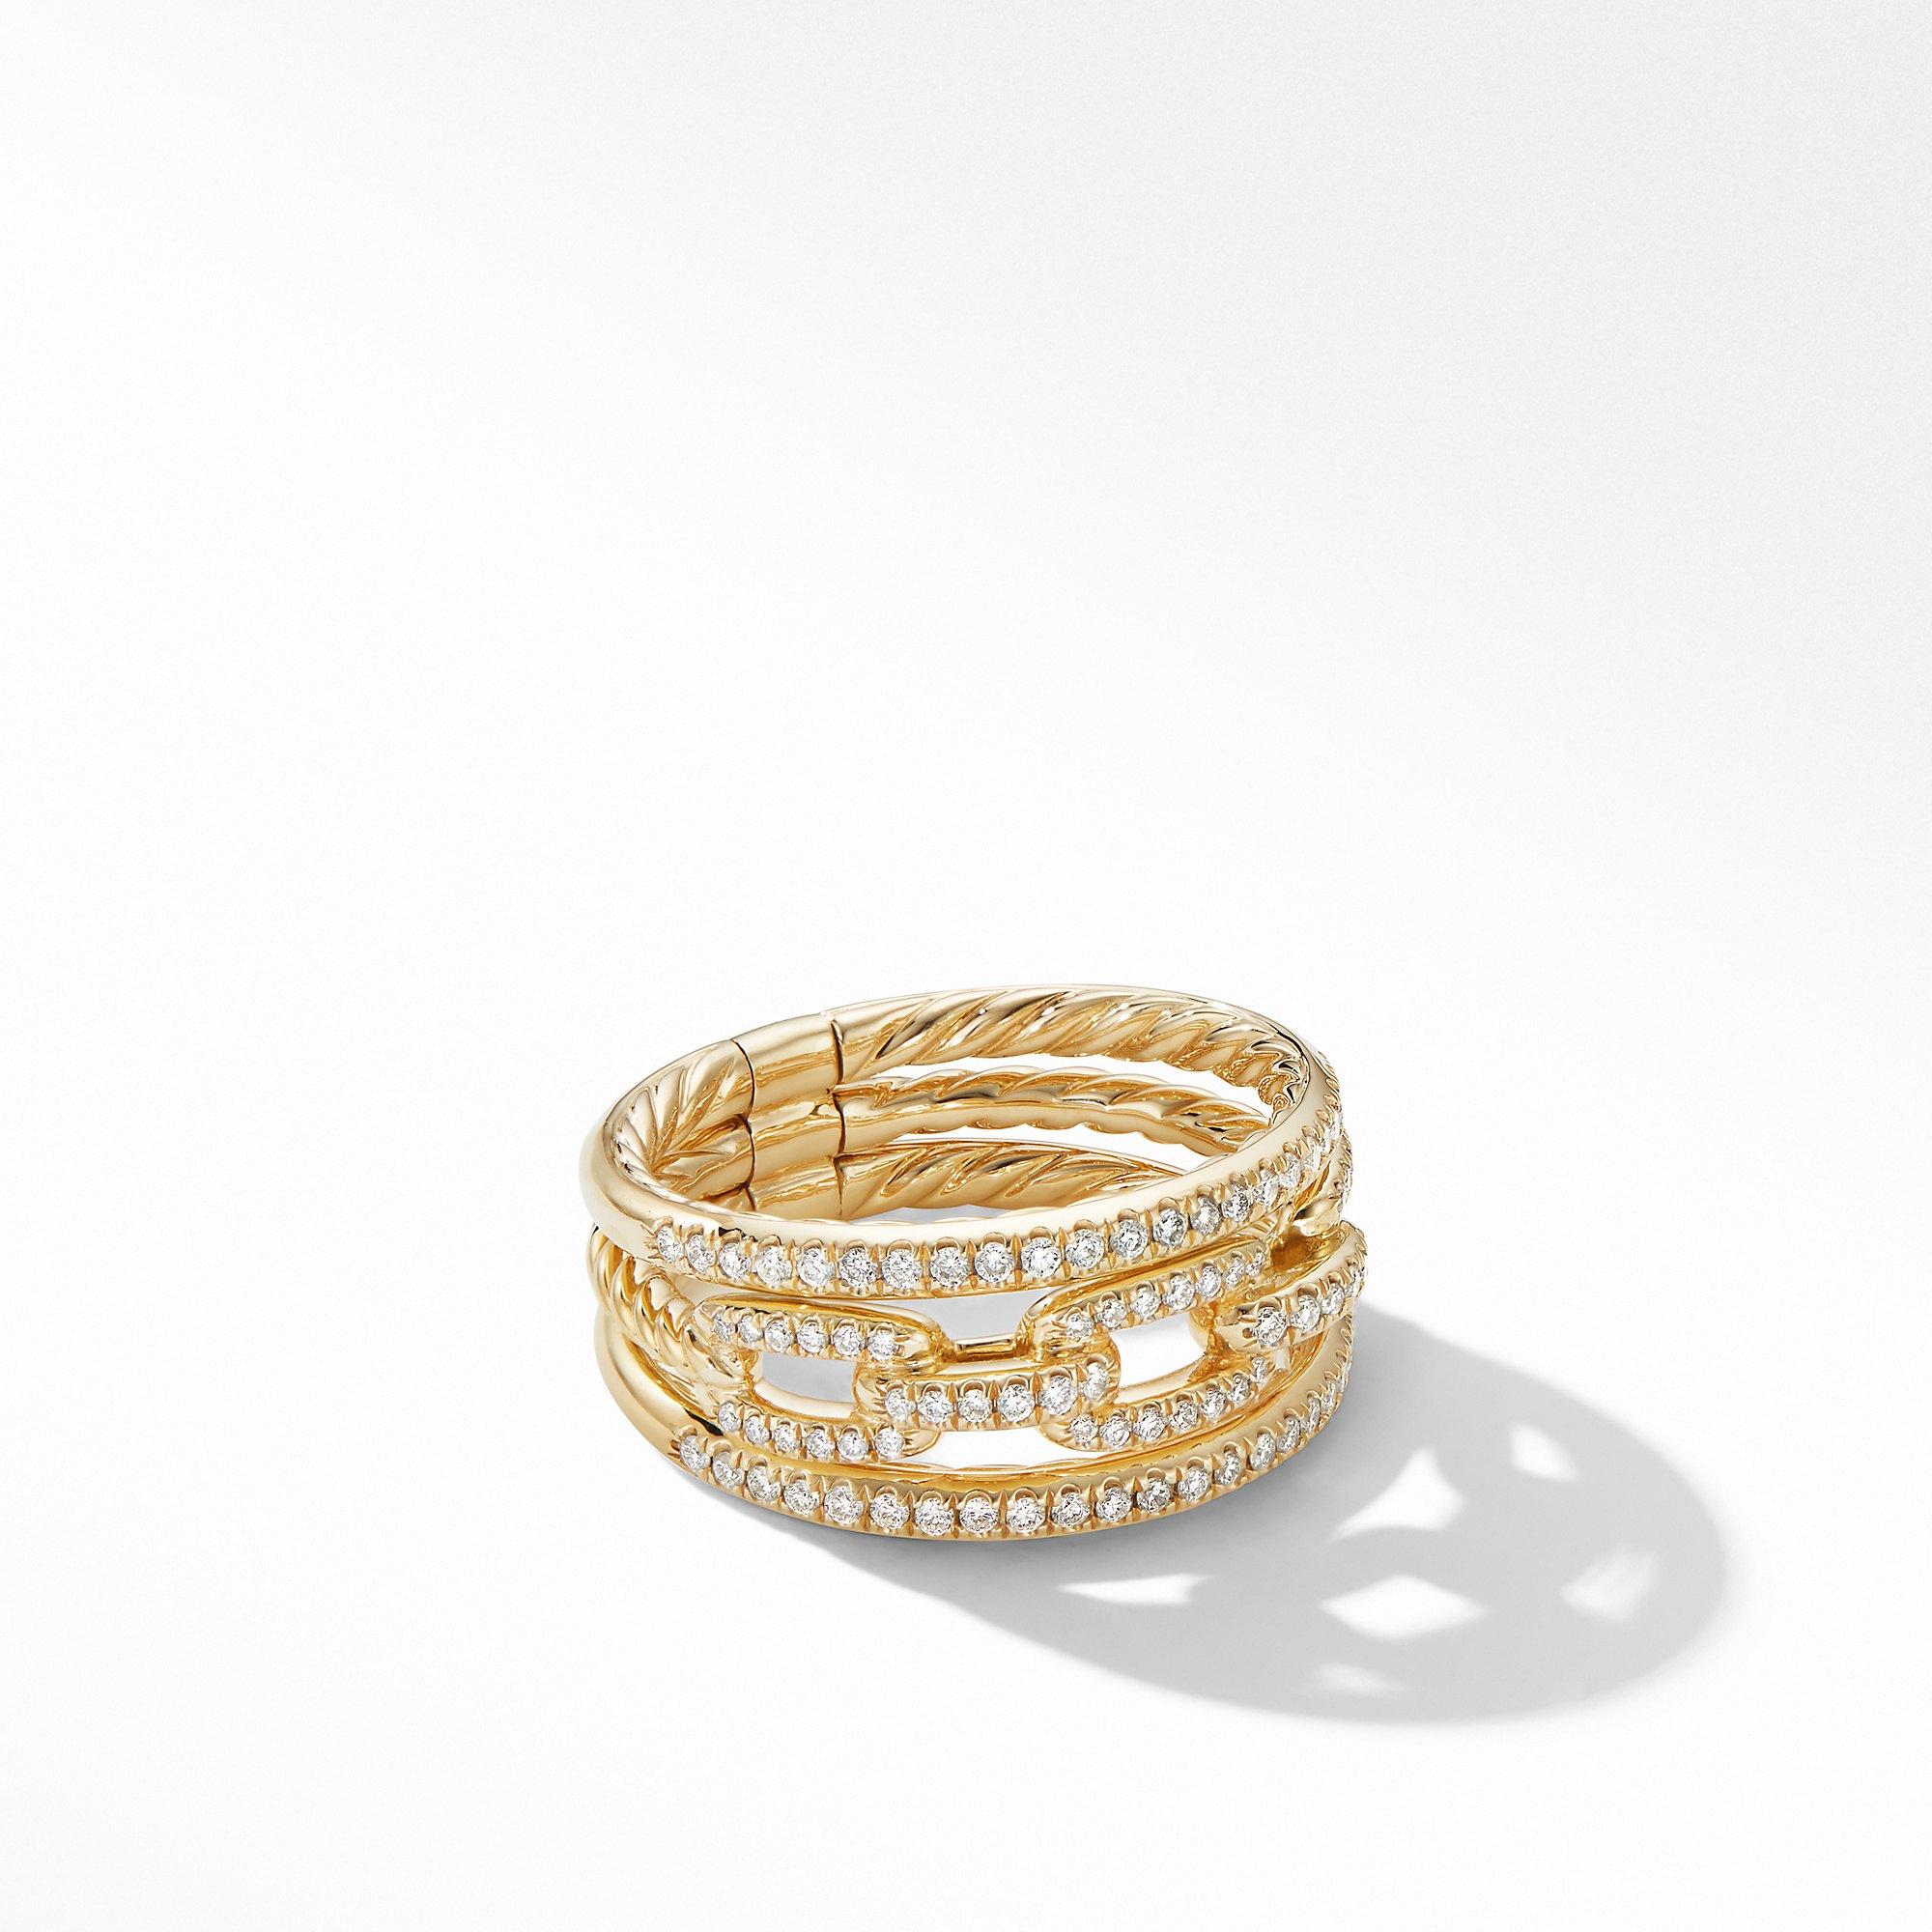 David Yurman Stax 3 Row Chain Link Ring in 18k Yellow Gold with Diamonds, size 6